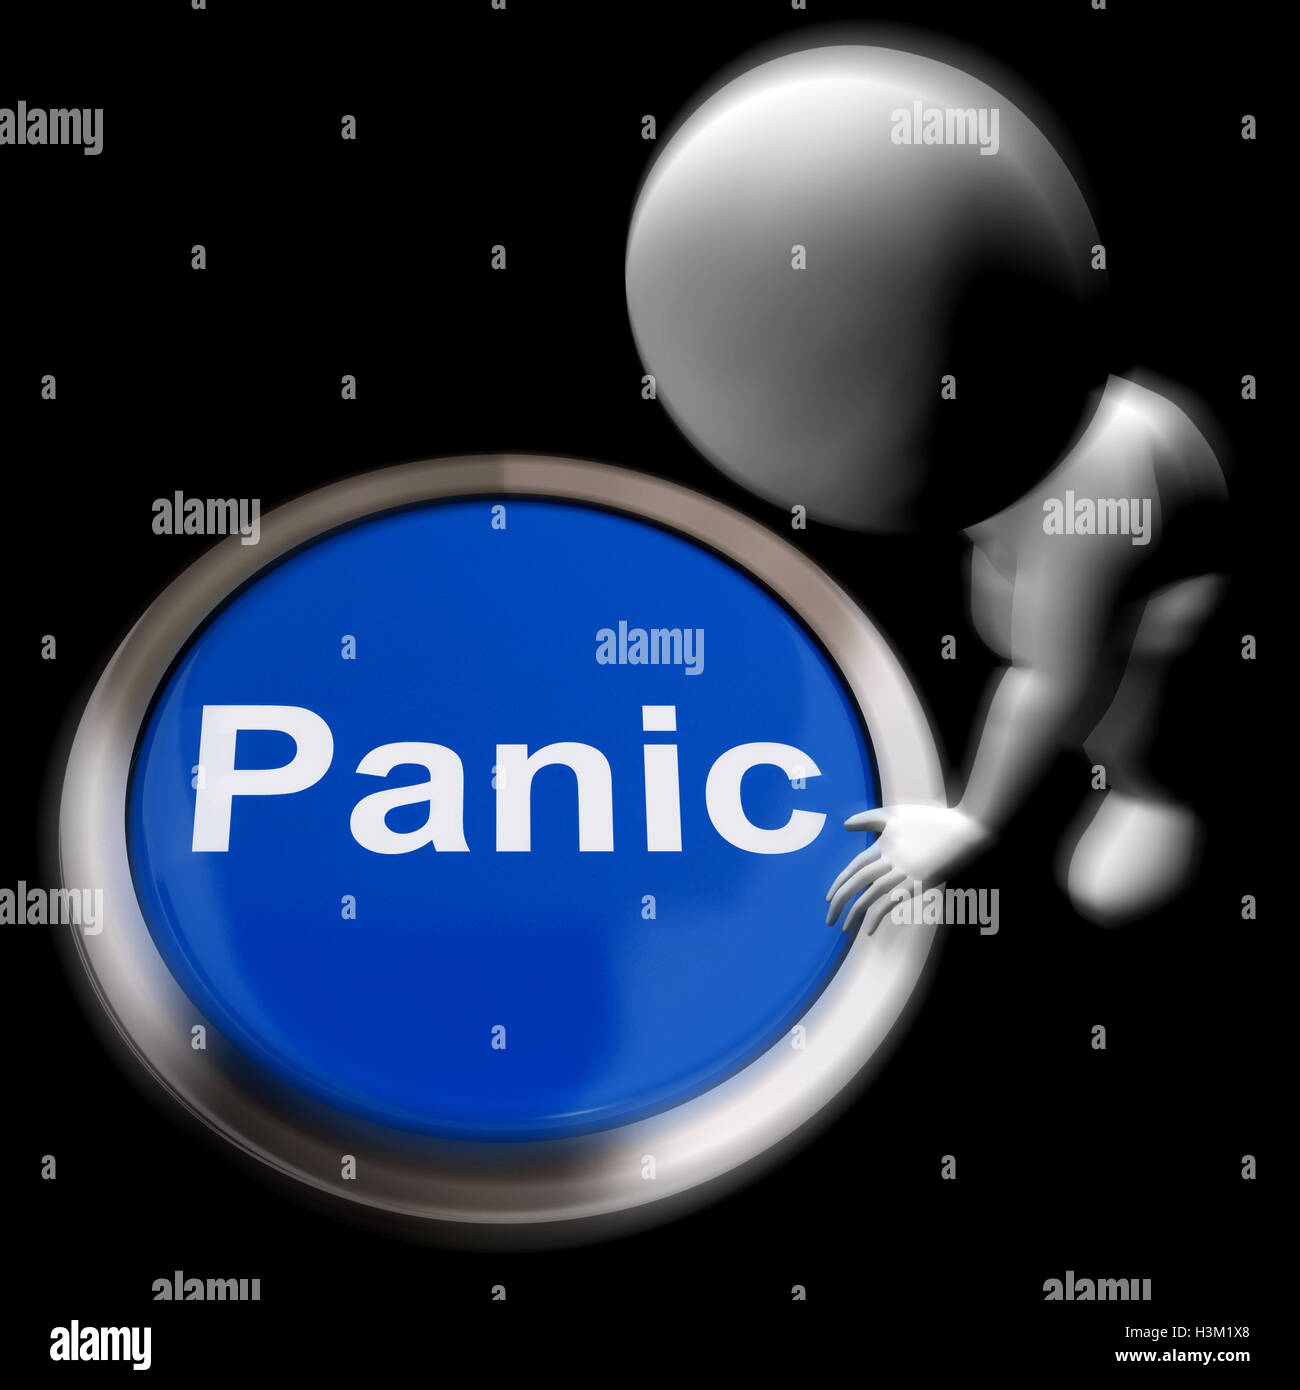 Panic Pressed Shows Alarm Distress And Crisis Stock Photo